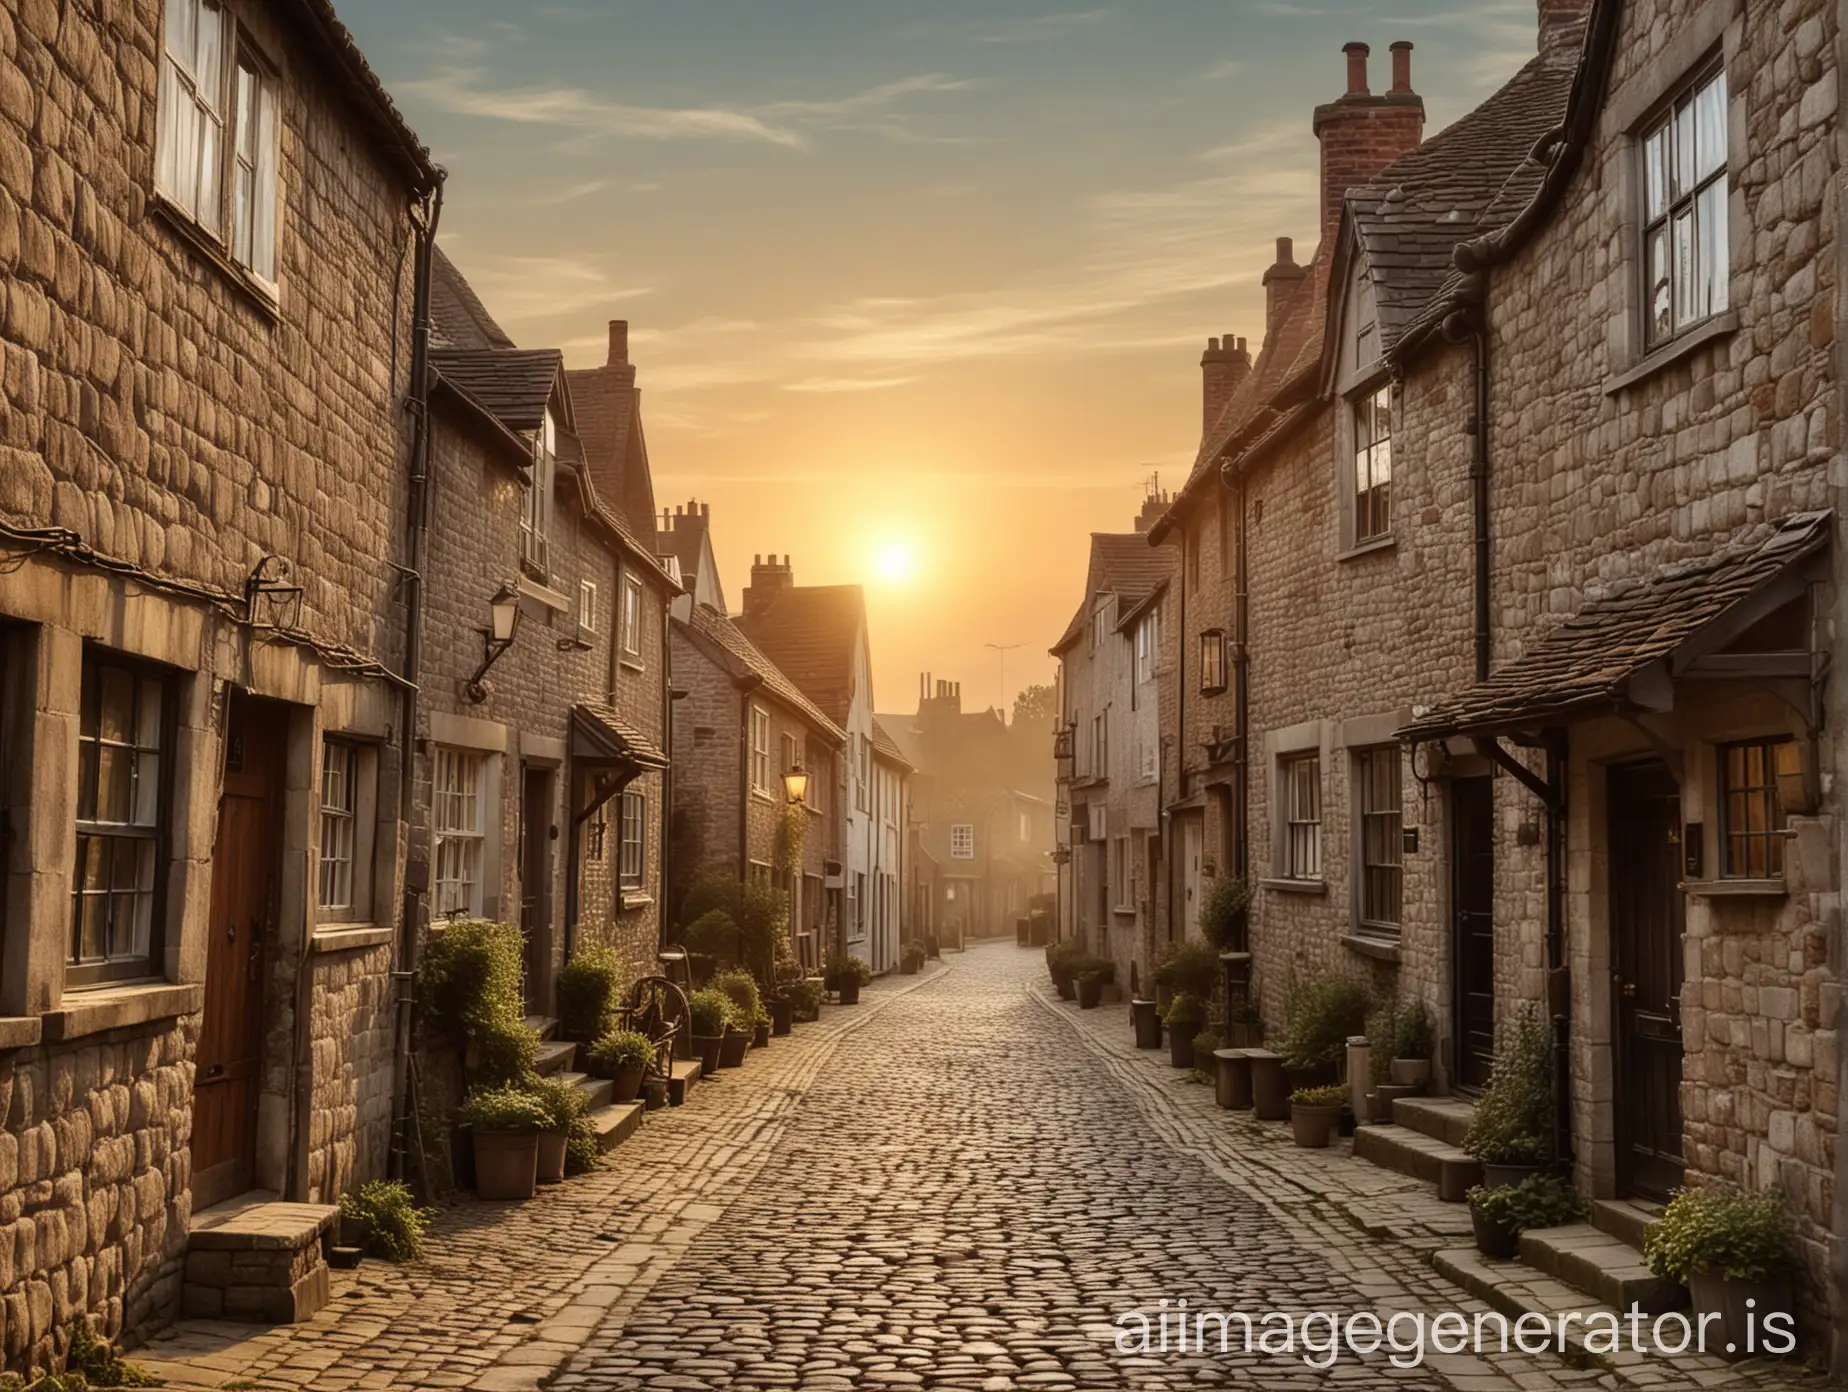 old cobblestone street sunrise English village vintagenn